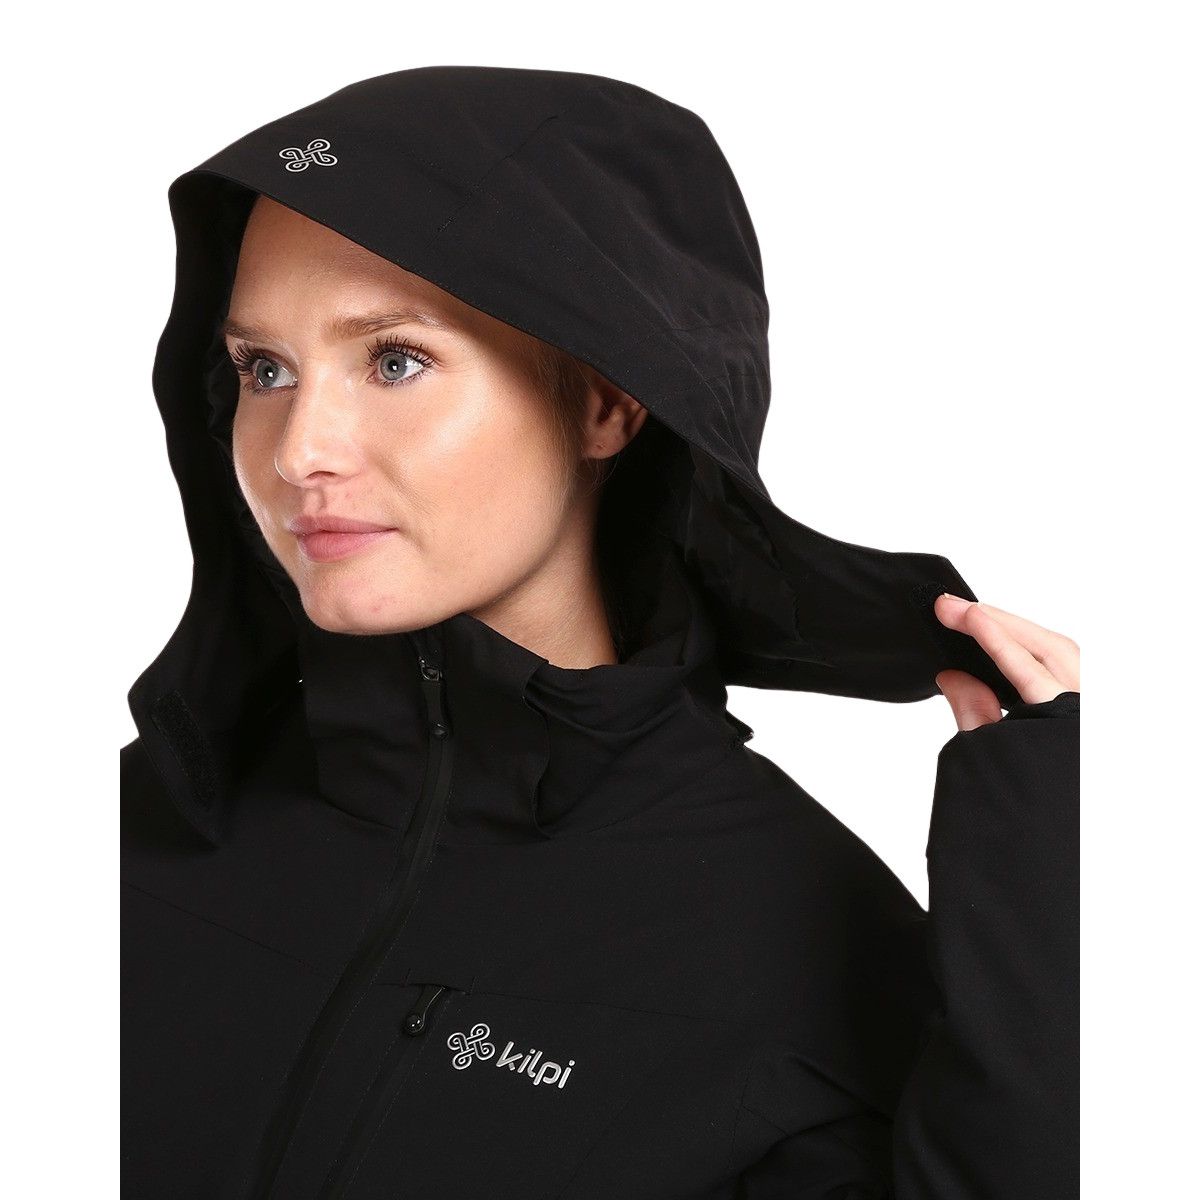 Kilpi Valera, manteau de ski, femmes, noir